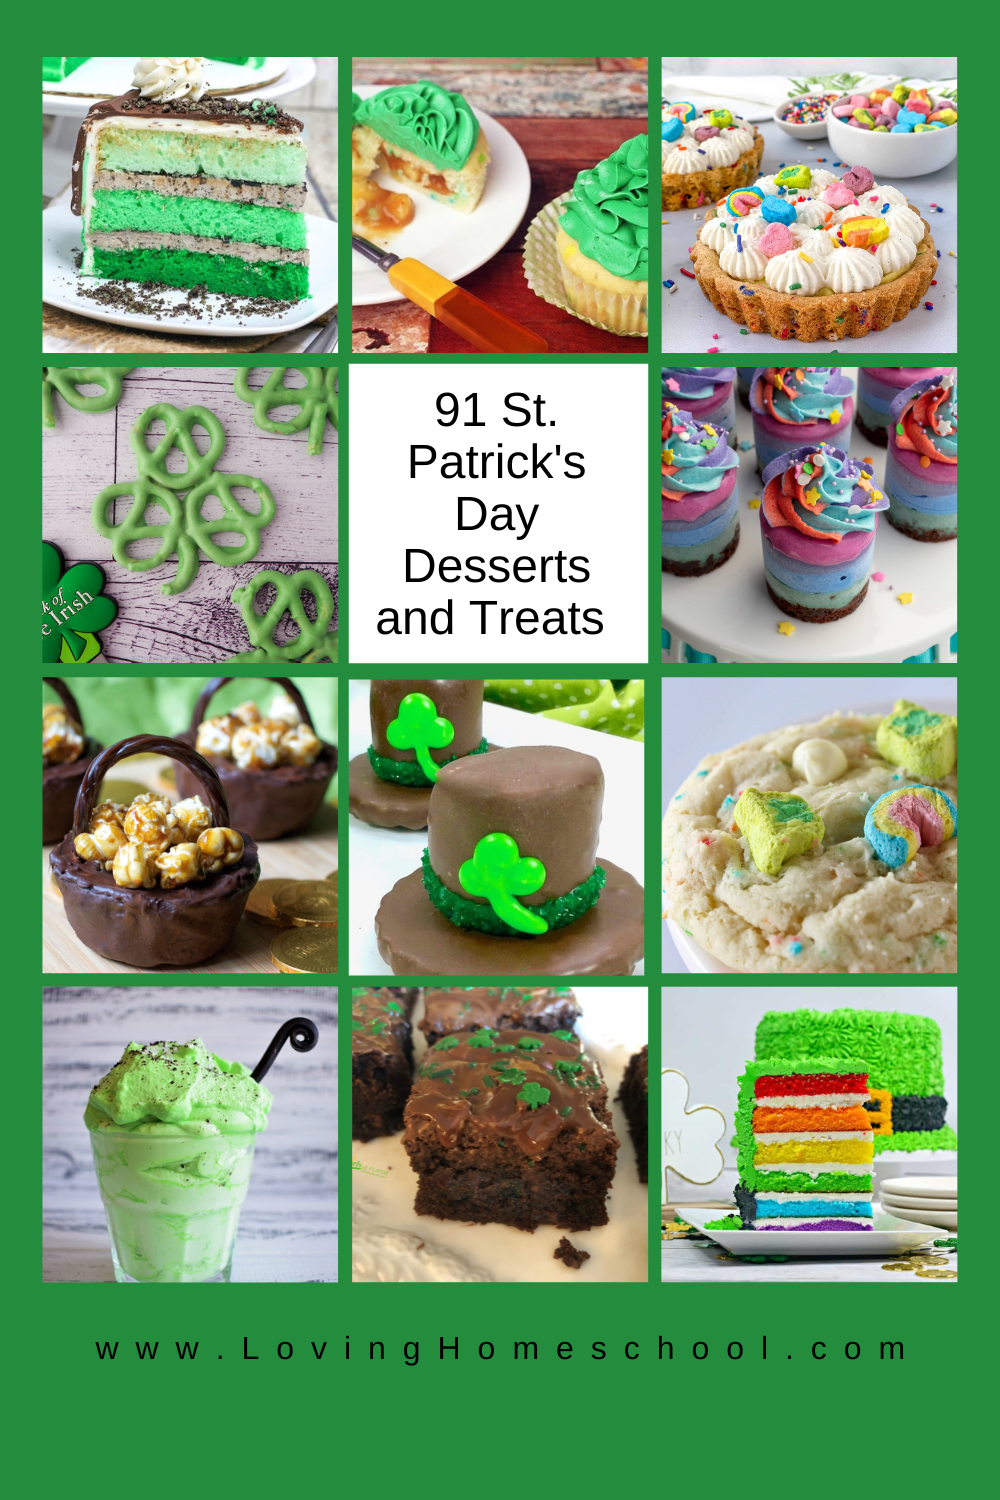 91 St. Patrick's Day Desserts and Treats Pinterest Pin